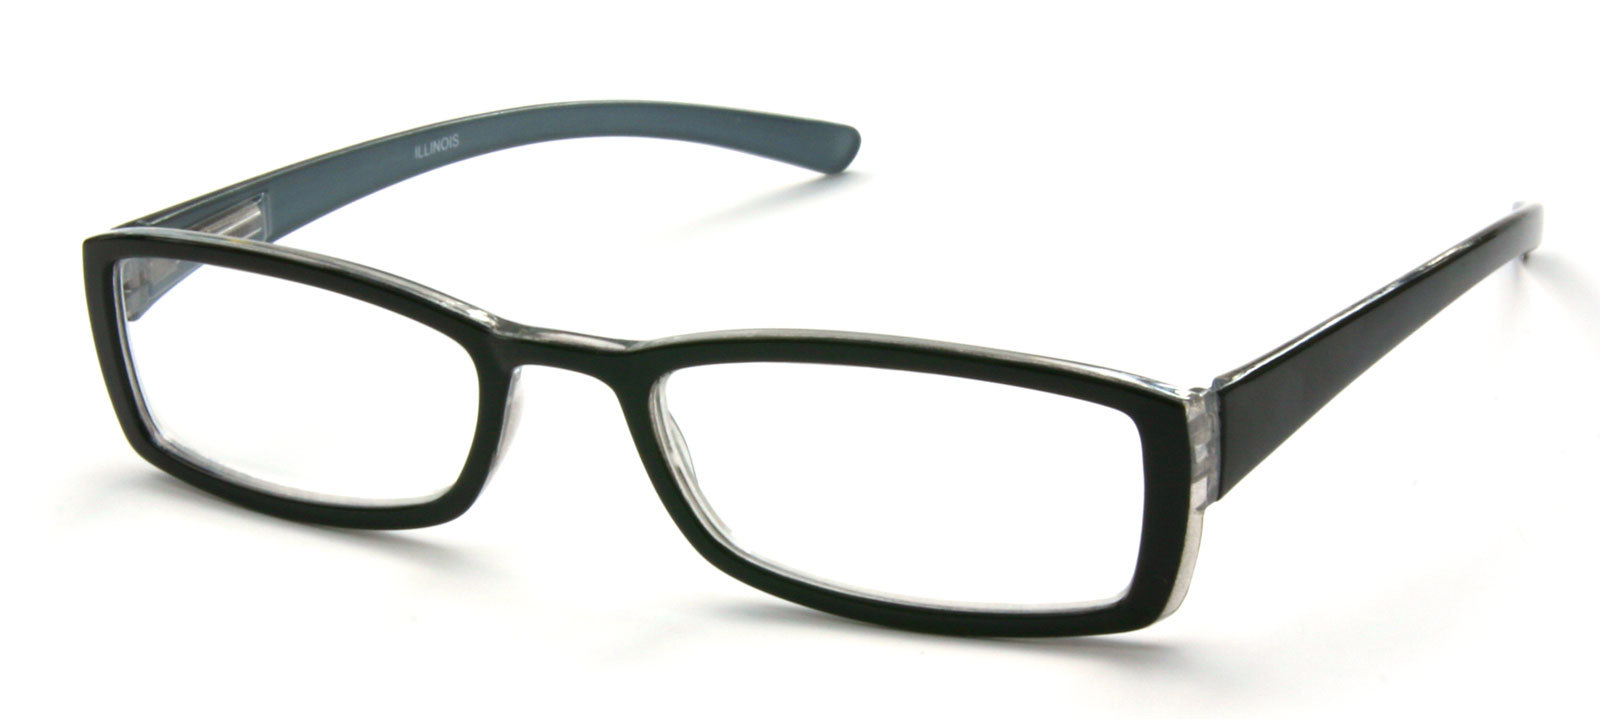 clipart reading glasses - photo #12